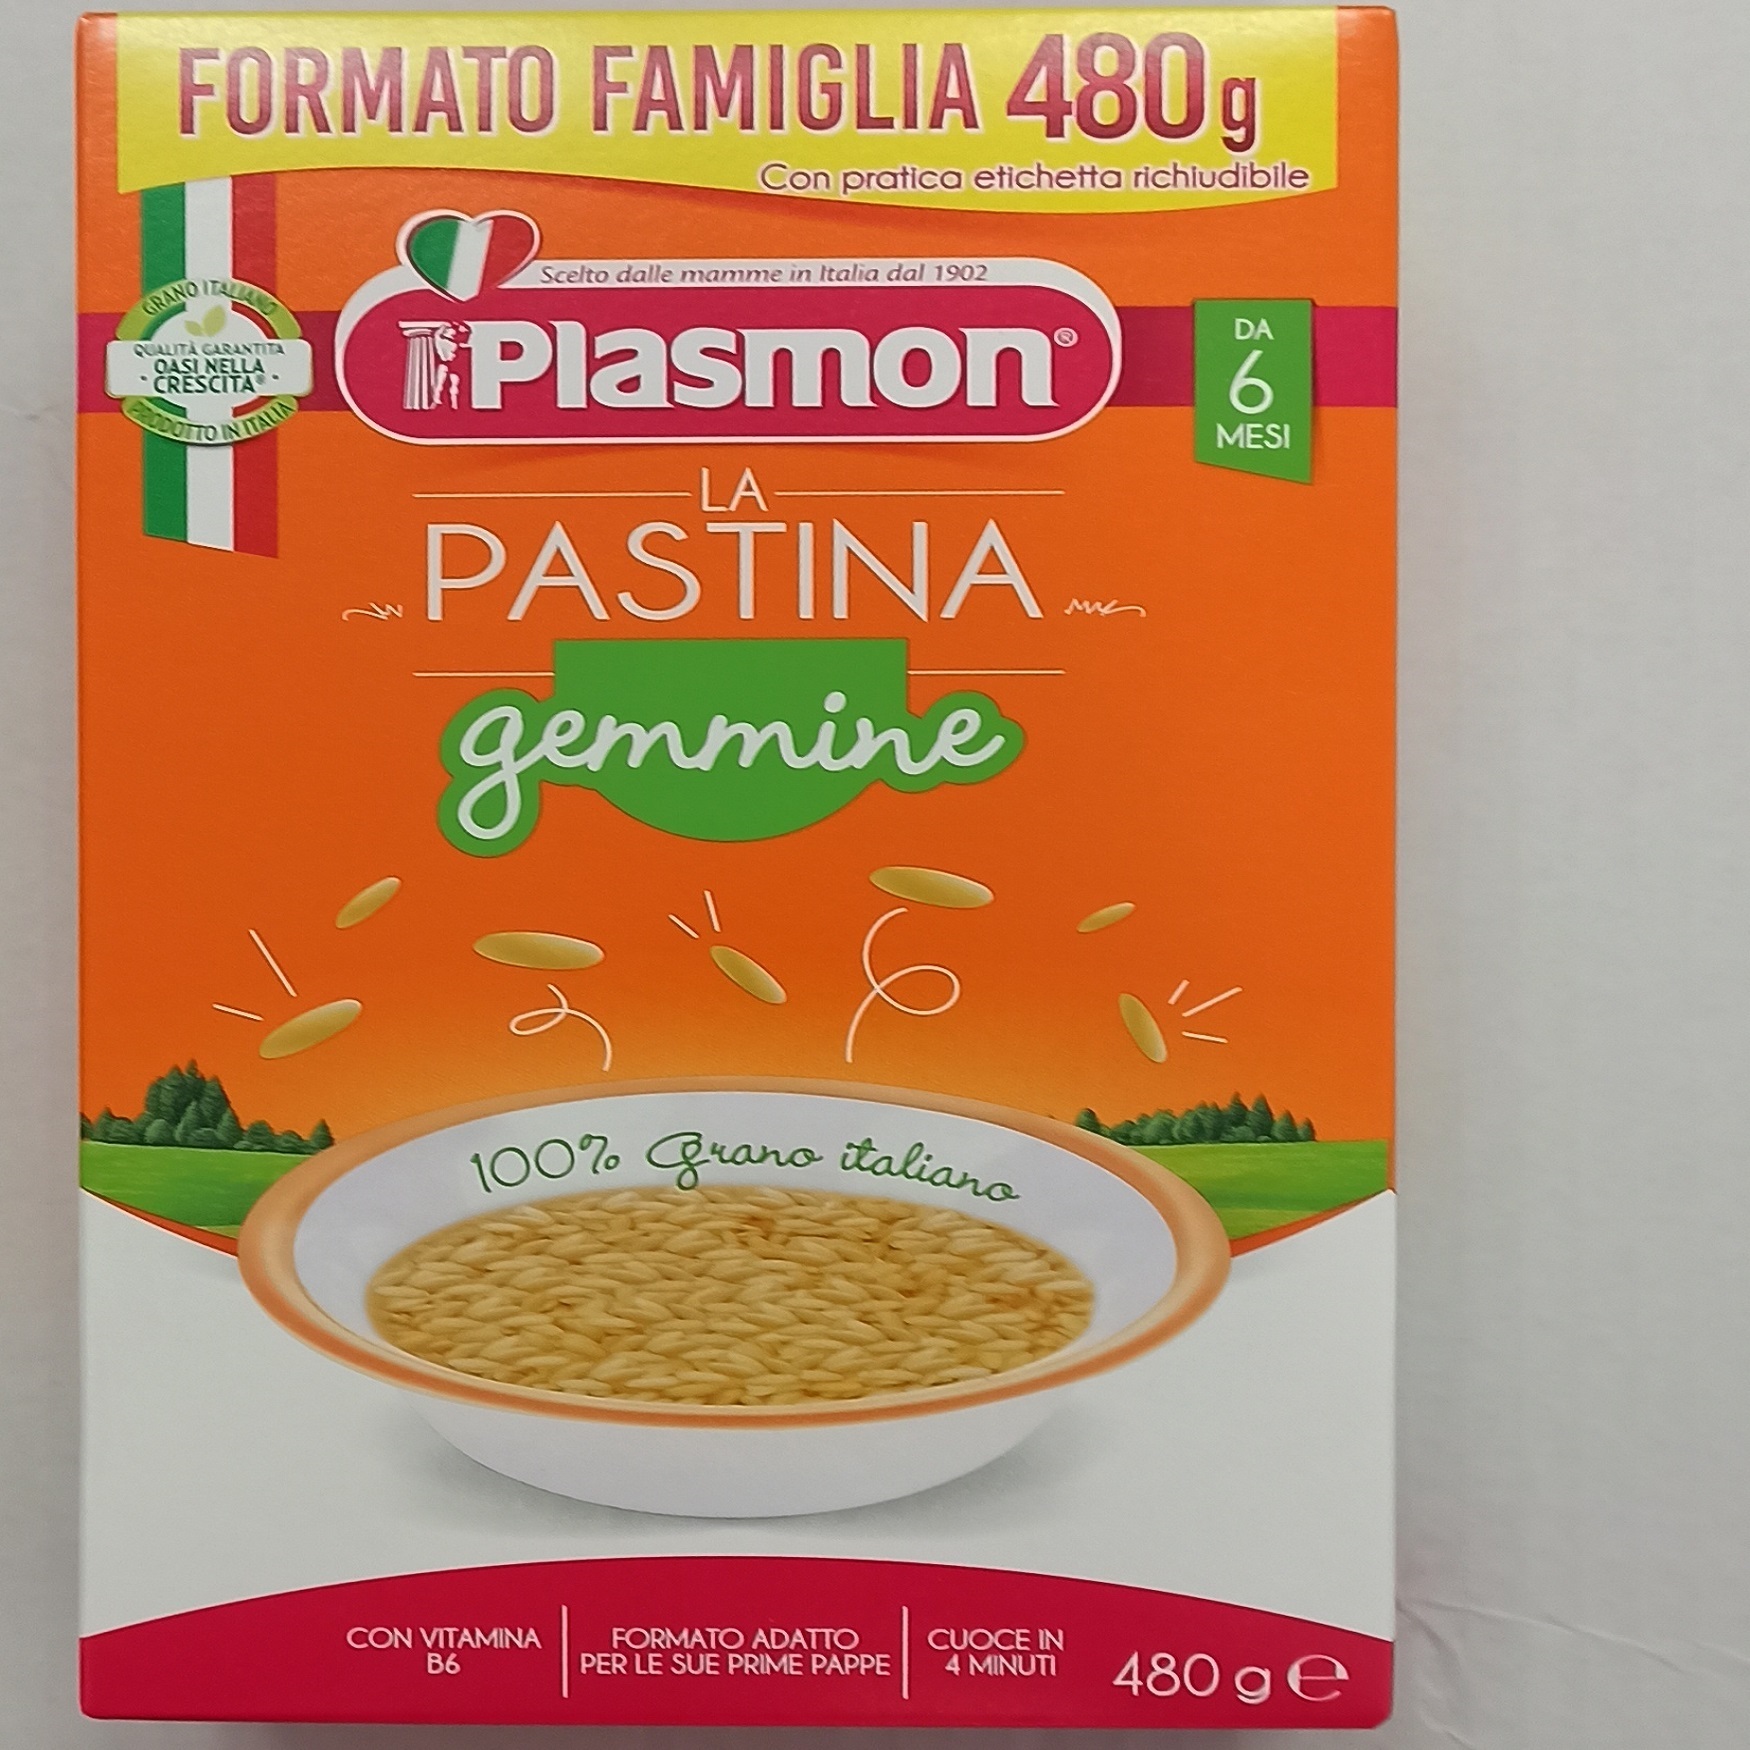 Plasmon Pastina Gemmine, 300 g Acquisti online sempre convenienti